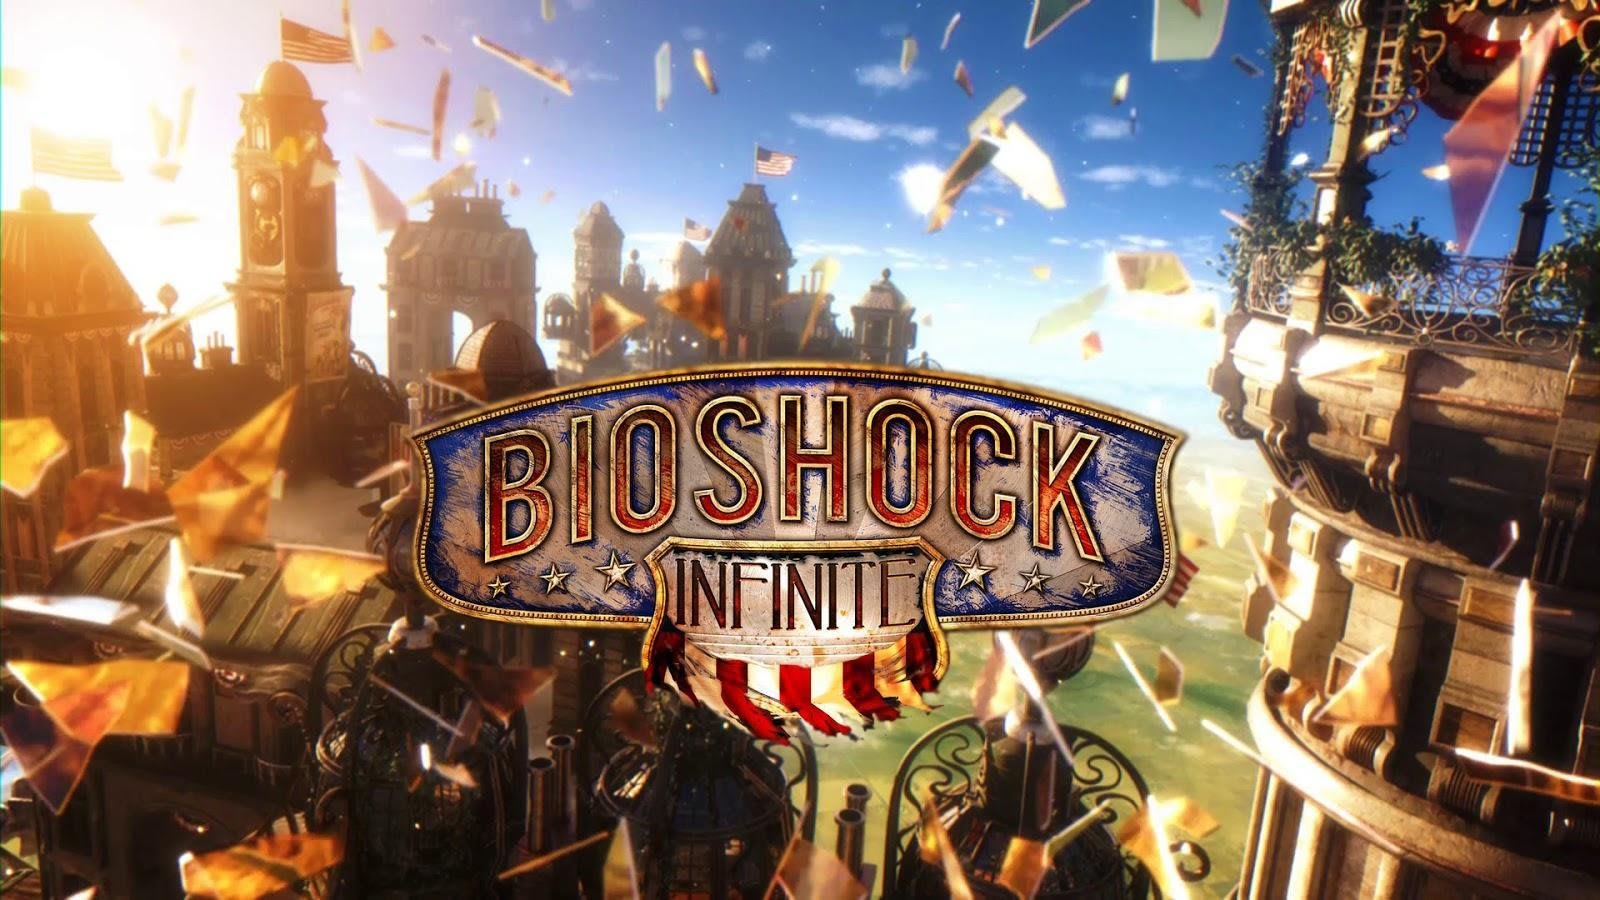 Bioshock Infinite - Save Elizabeth - Trailer 